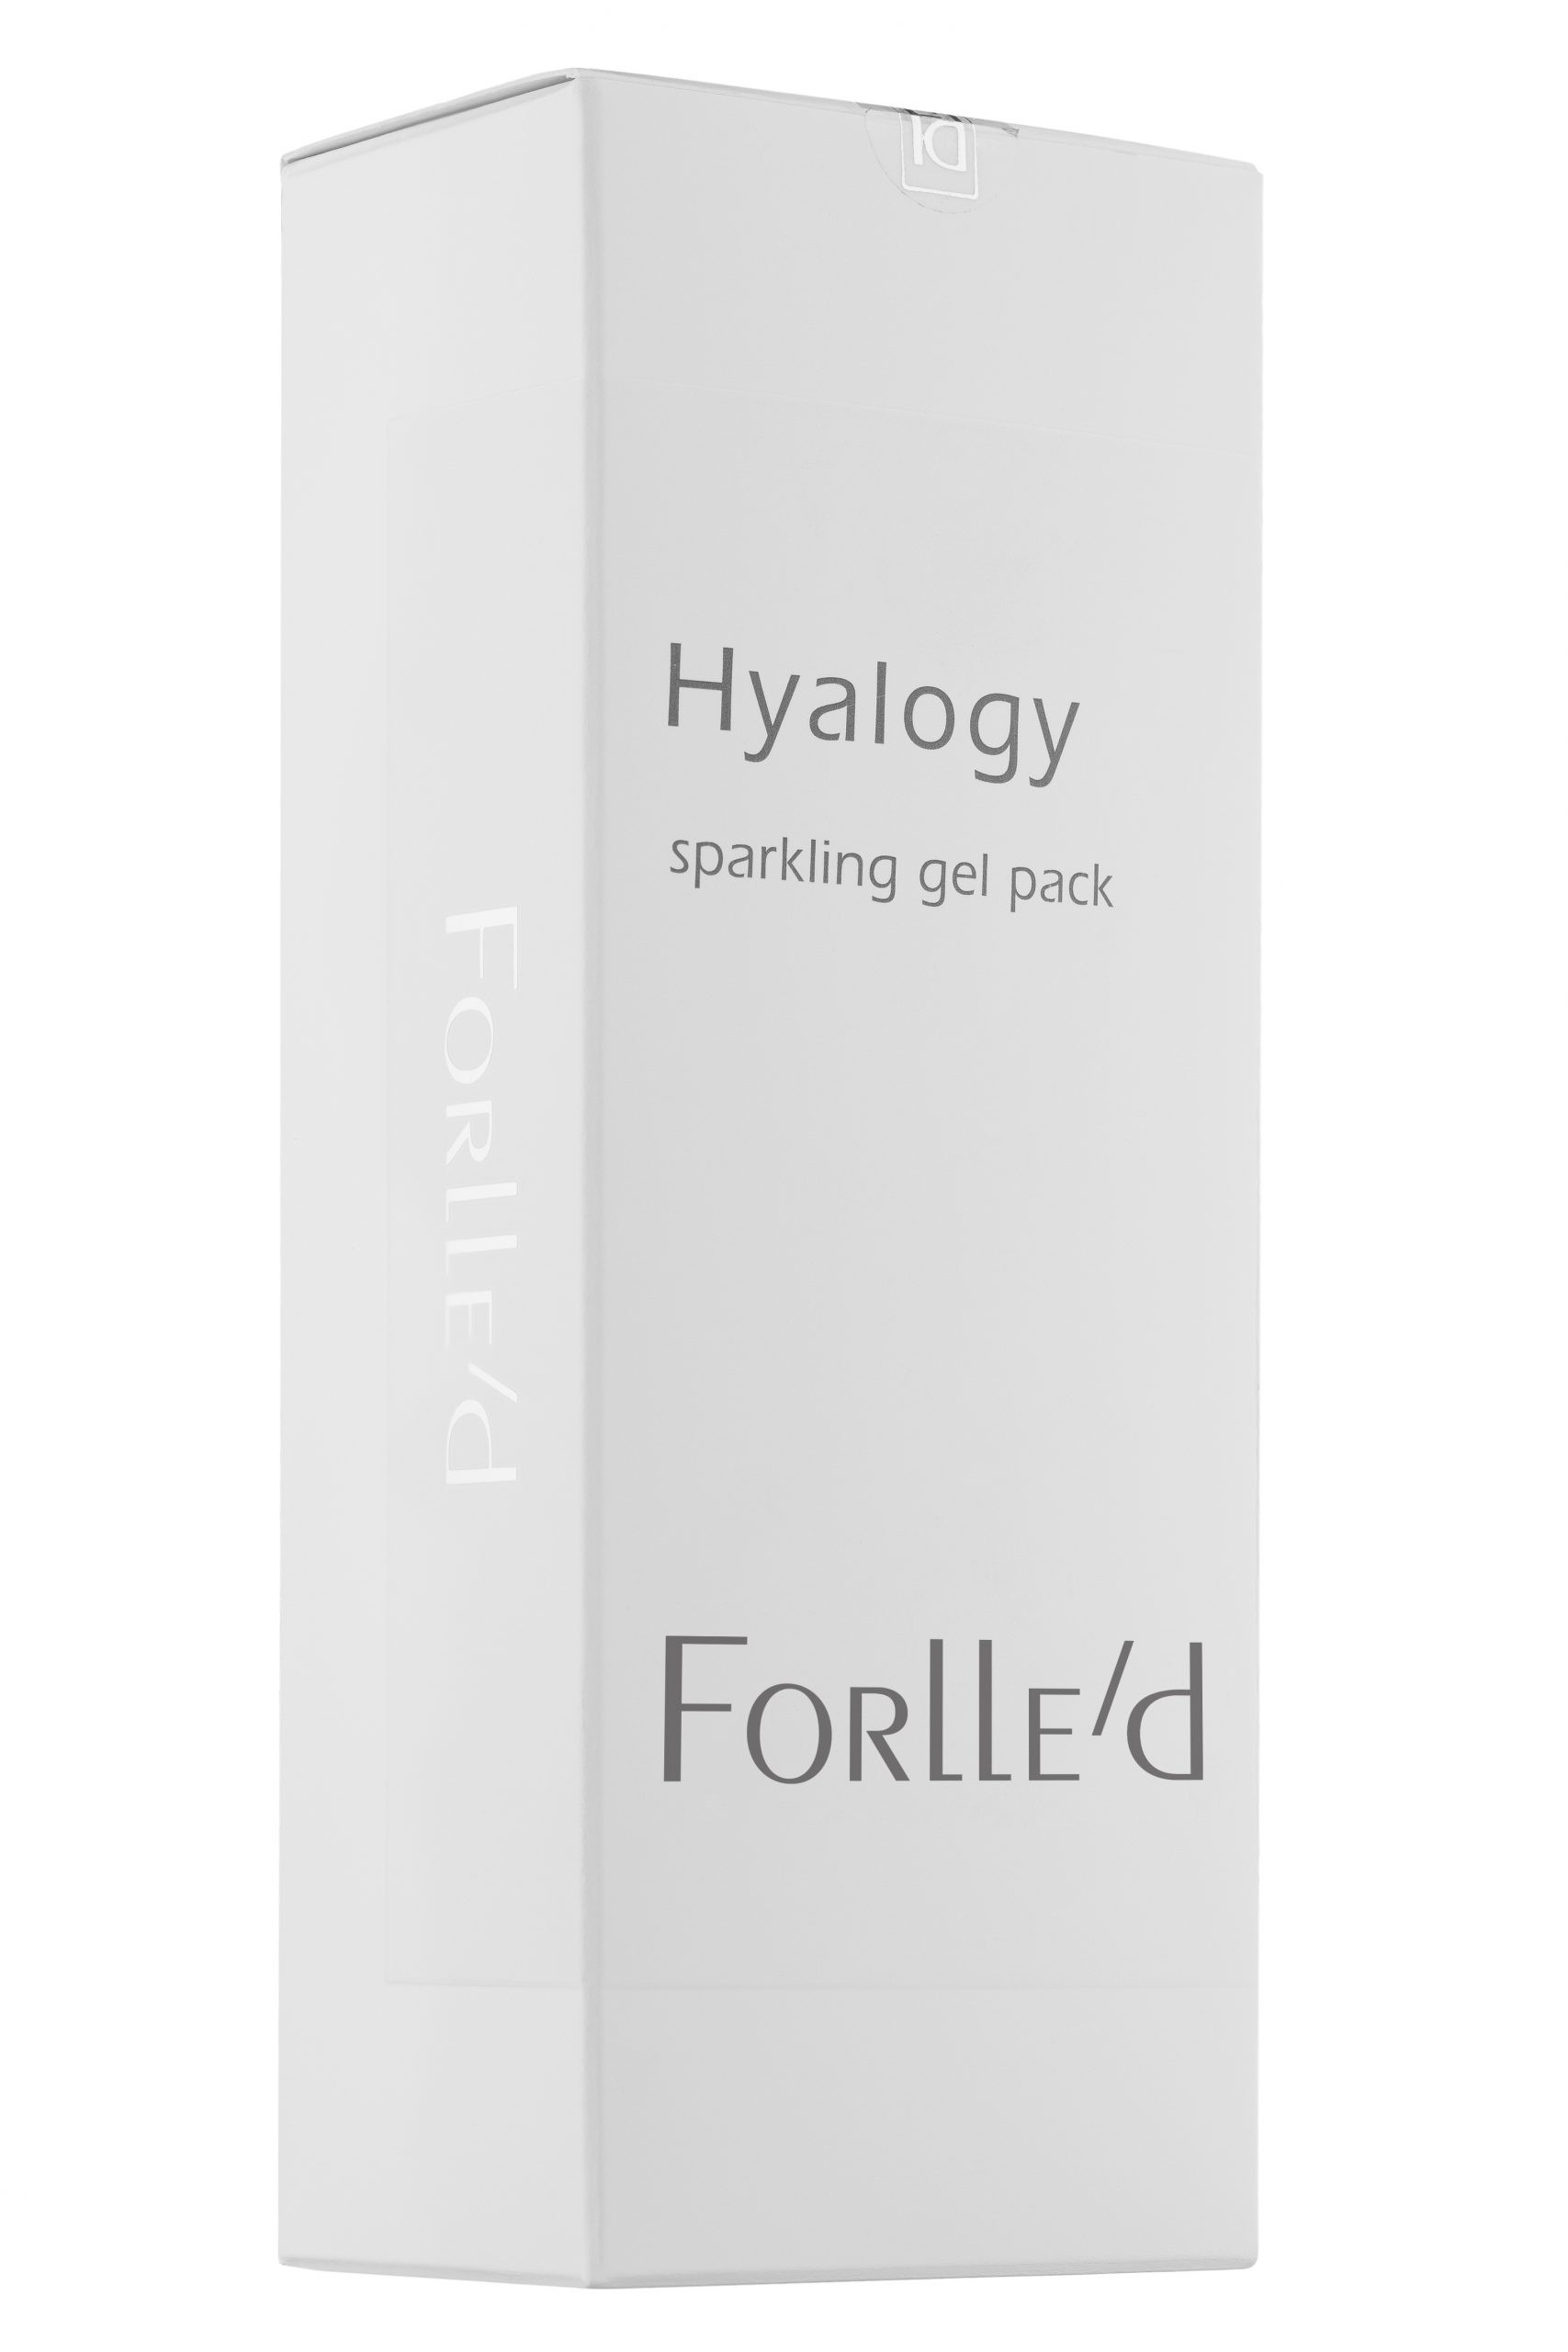 Forlled Hyalogy Sparkling Gel Pack 10grx5 pack